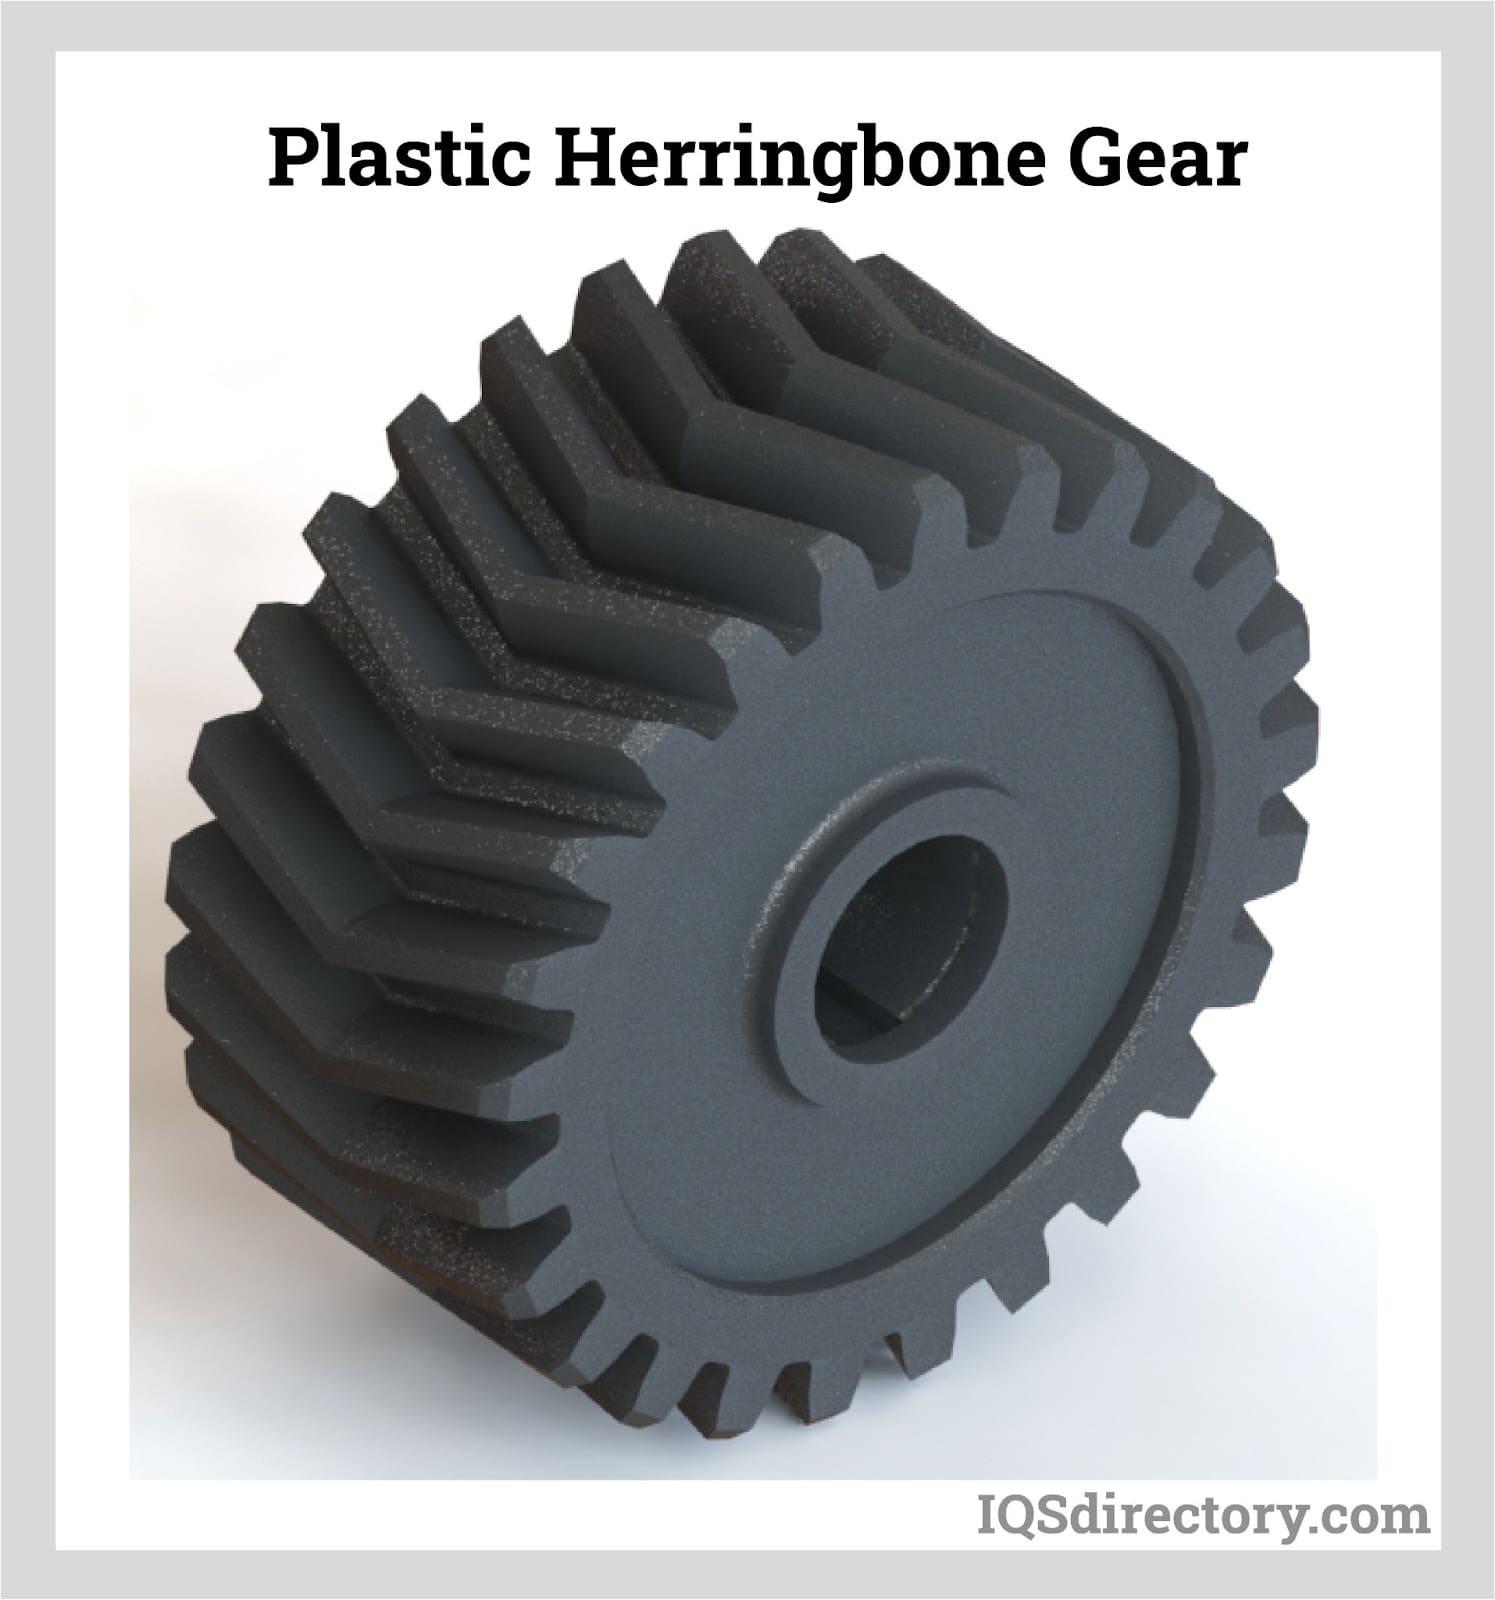 Plastic Herringbone Gears